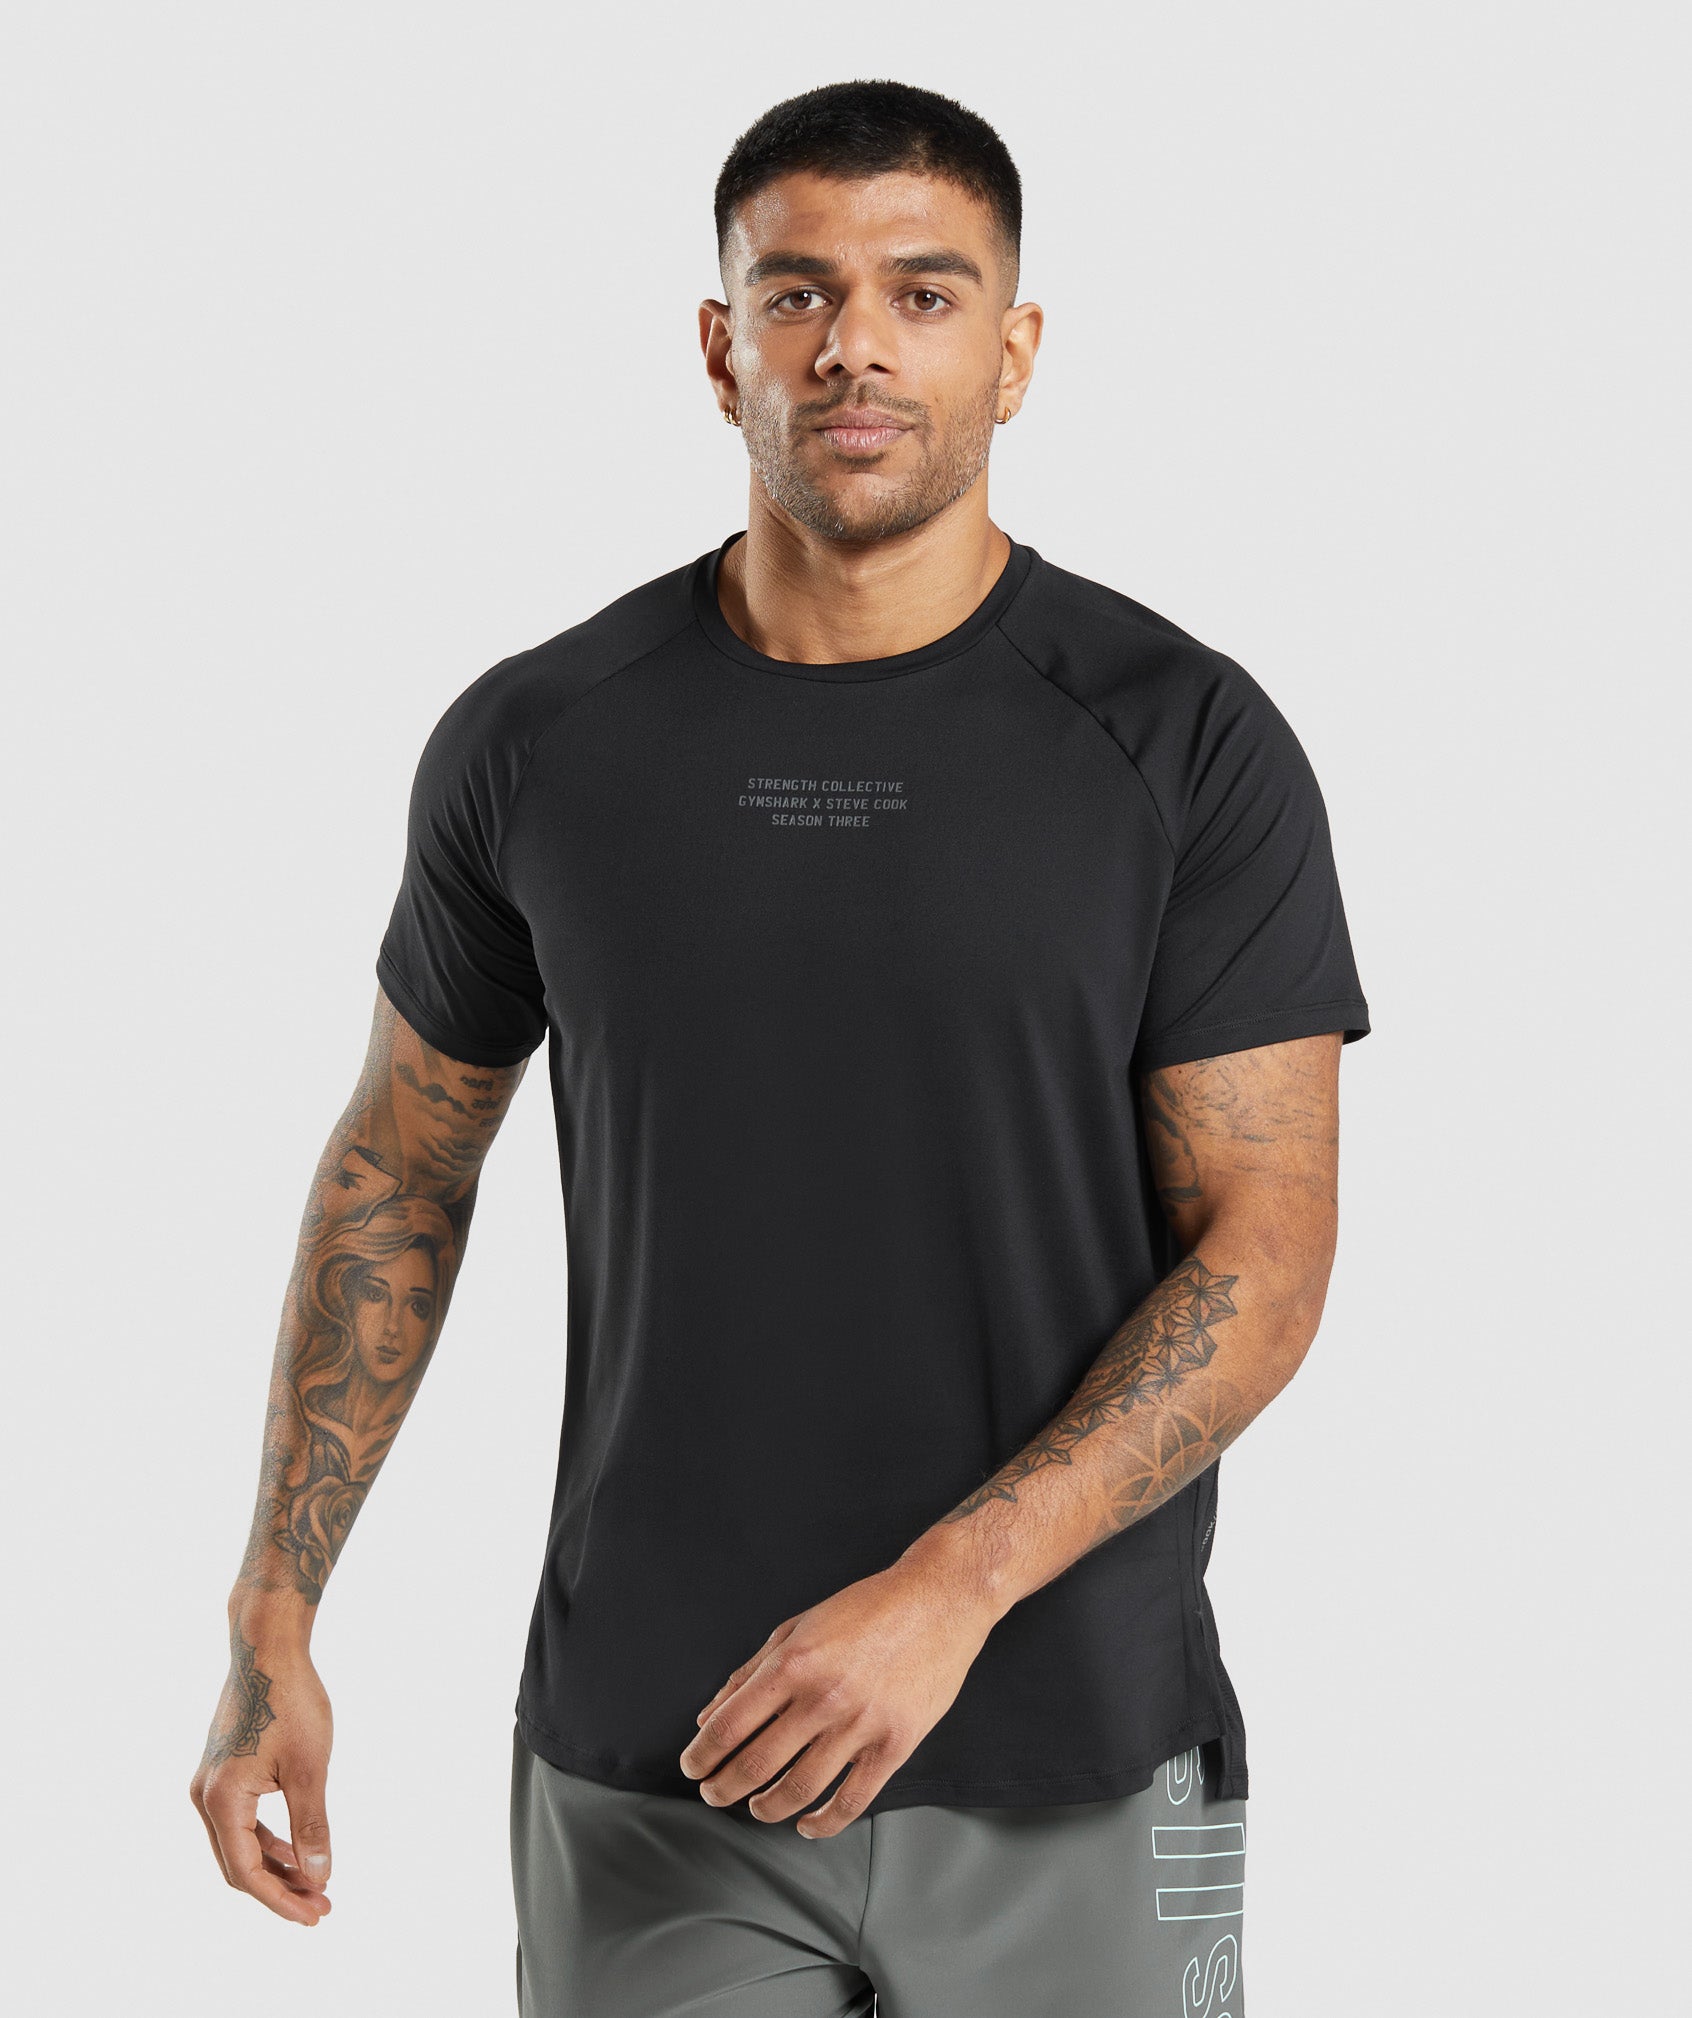 Gymshark//Steve Cook T-Shirt in Black - view 1